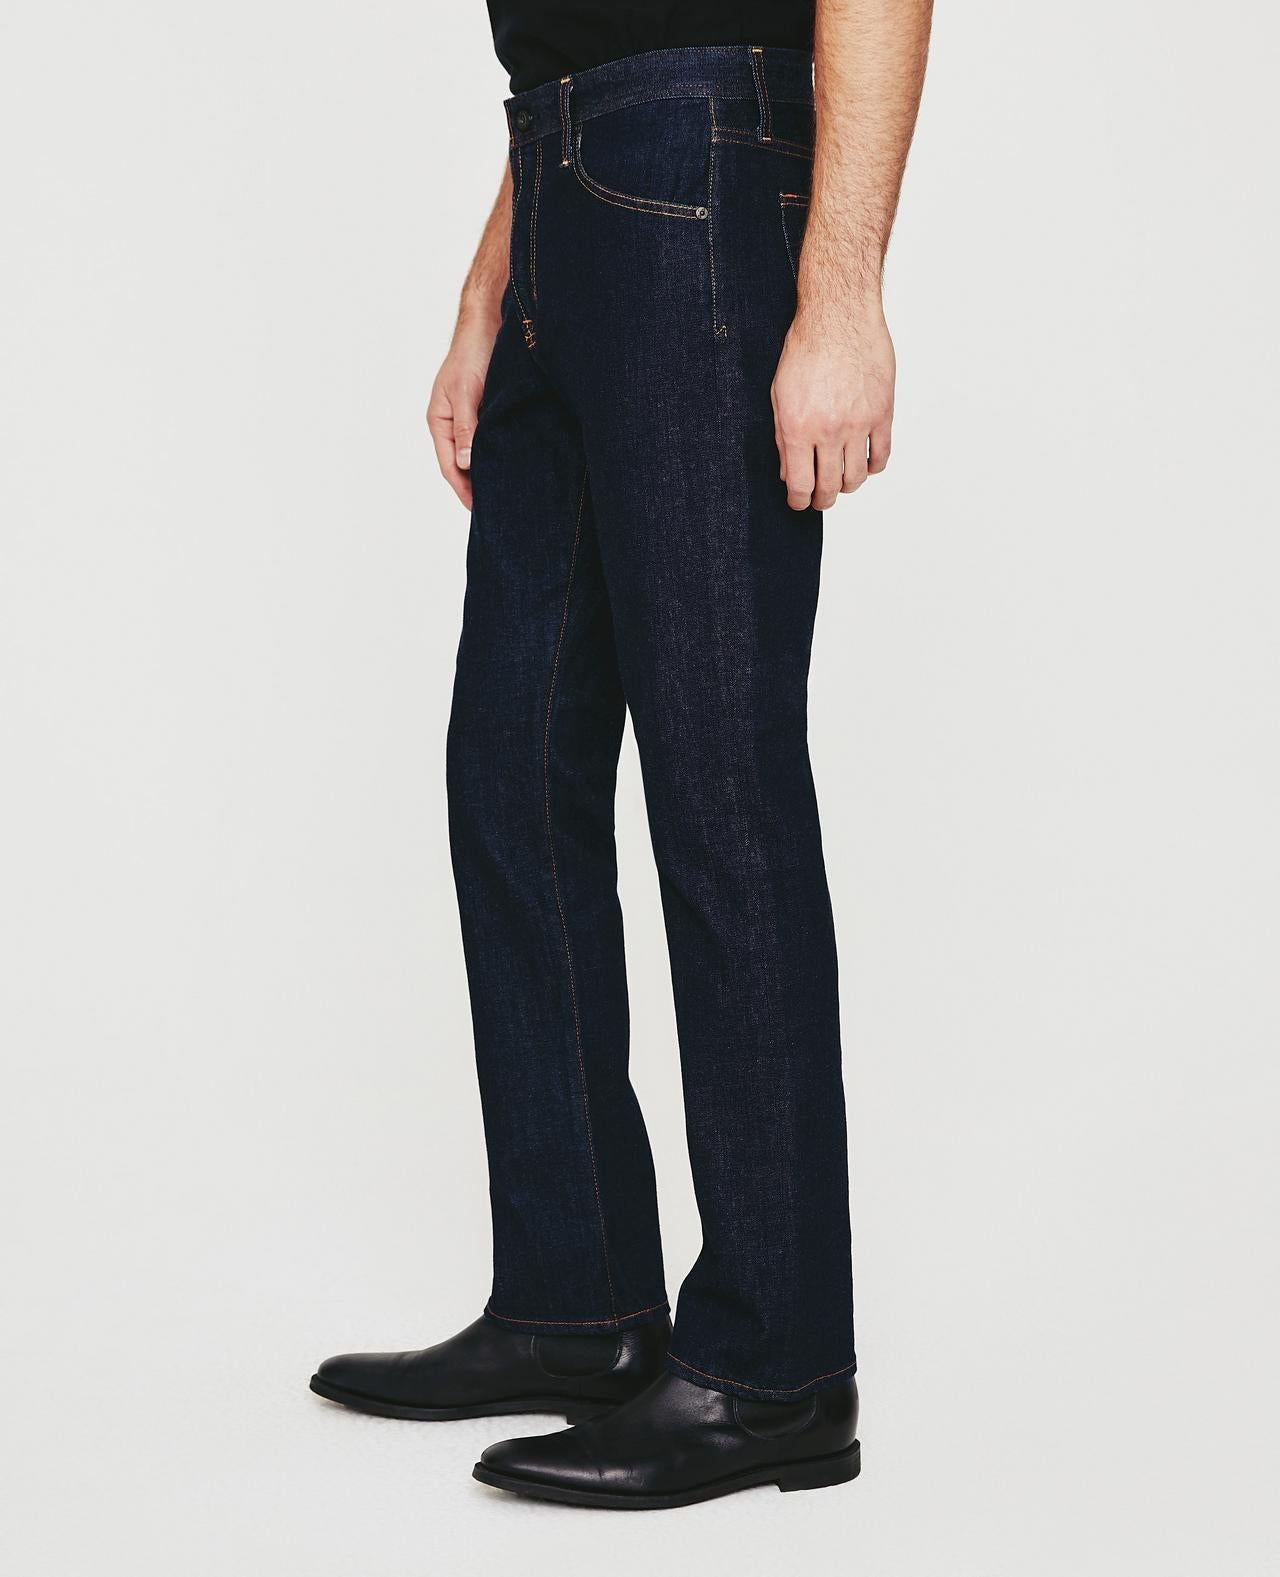 Everett Slim Straight Jean - AG Jeans - Danali - 1794TSY-CUCL-30